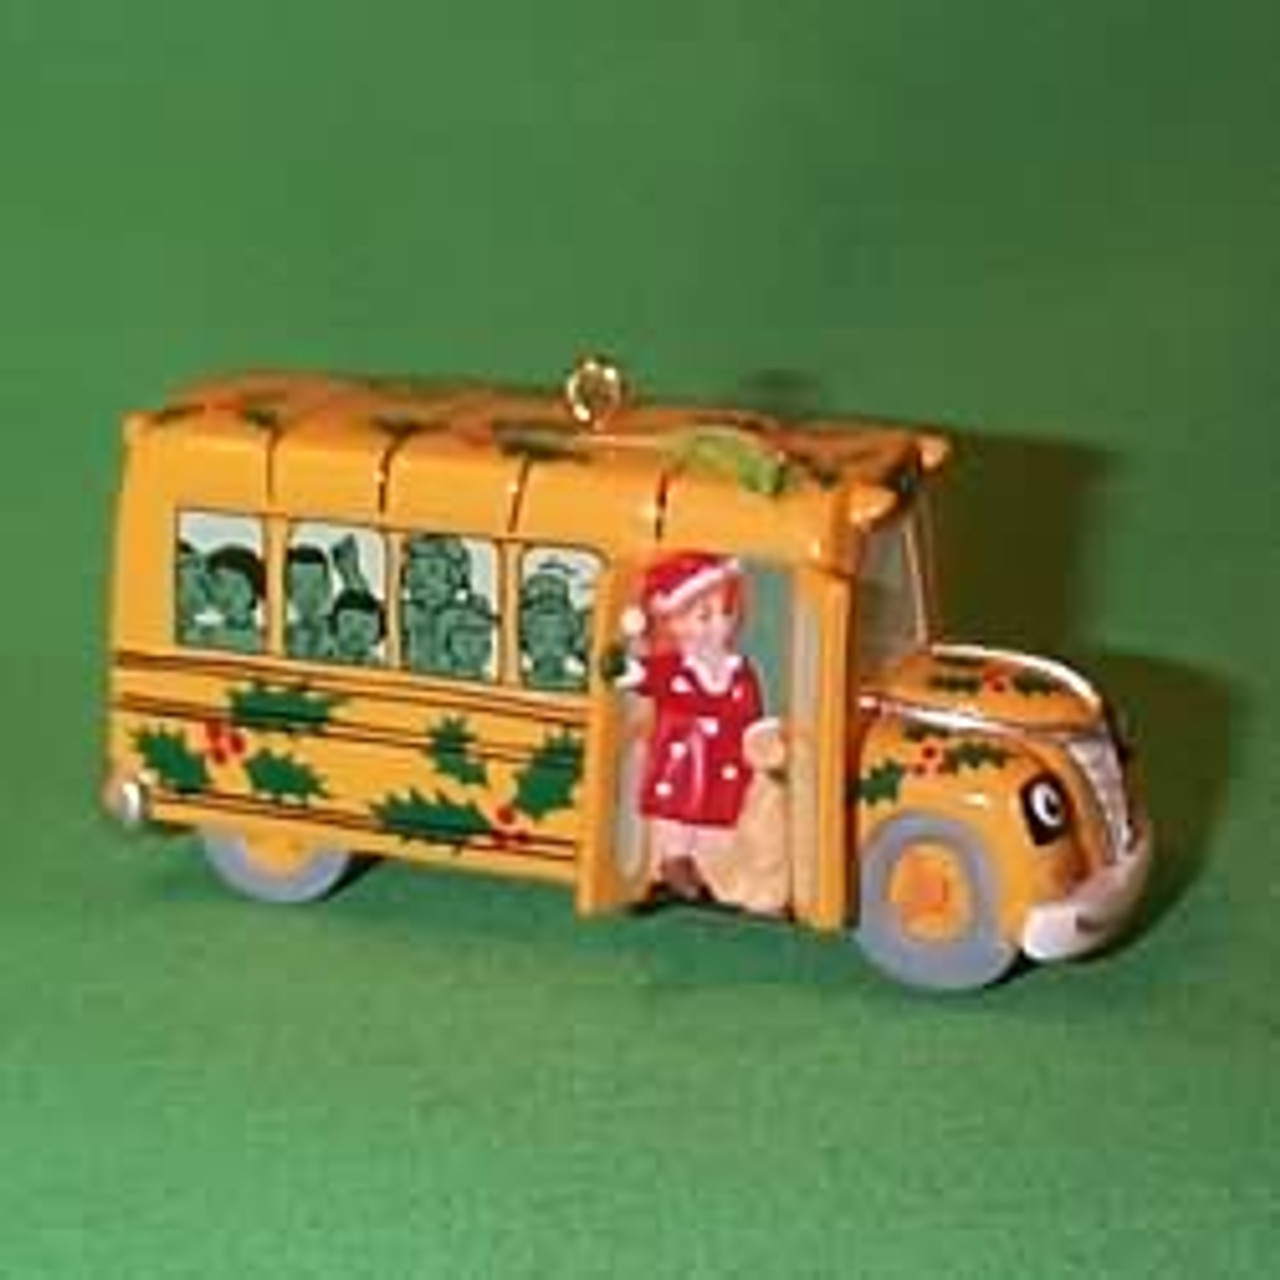 Hallmark Keepsake Disney's School Bus Lunch Box Set Christmas Ornament. 